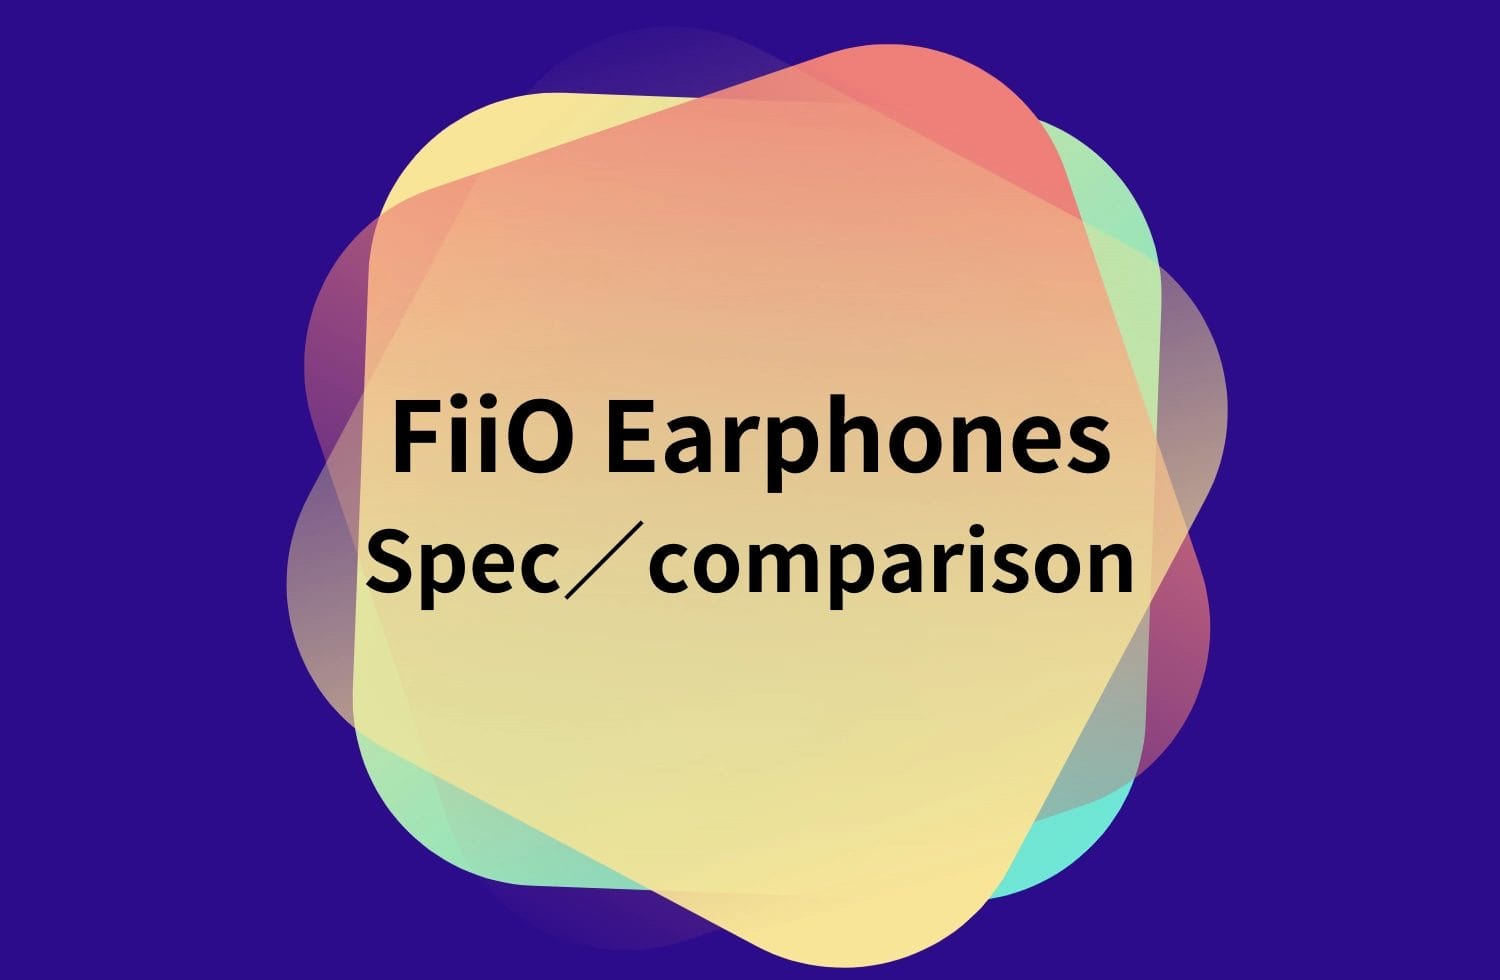 Fiio Earphones Specs